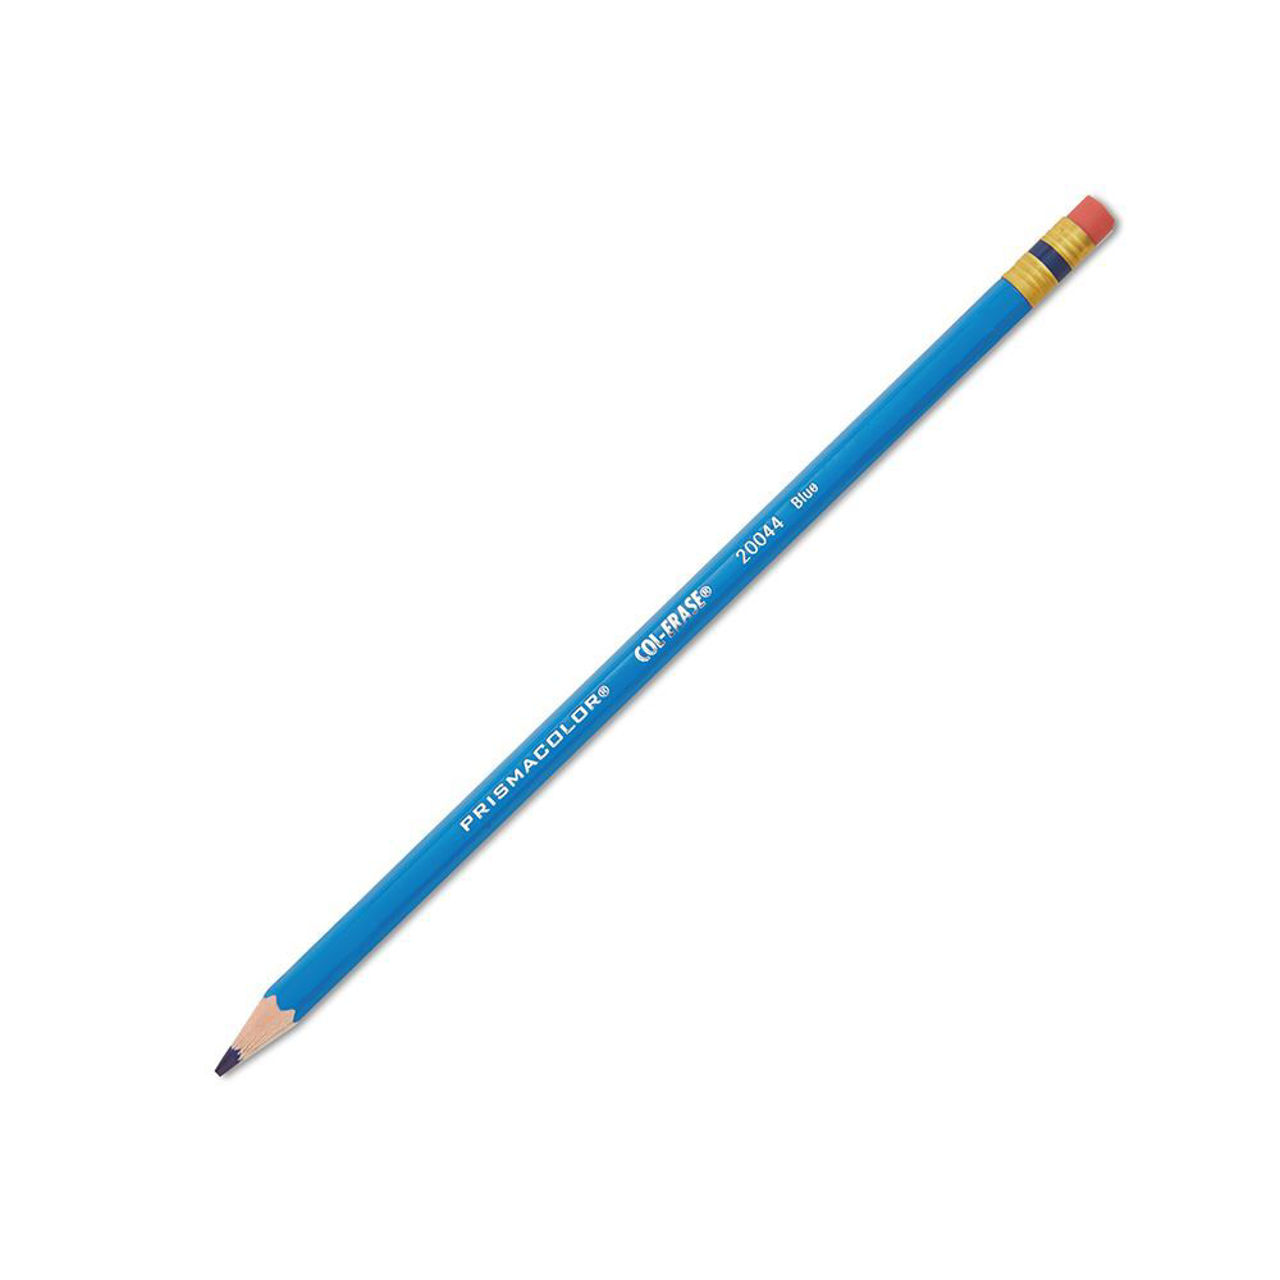 https://www.carpediemmarkers.com/images/thumbs/0019962_prismacolor-col-erase-colored-pencils_1280.jpeg